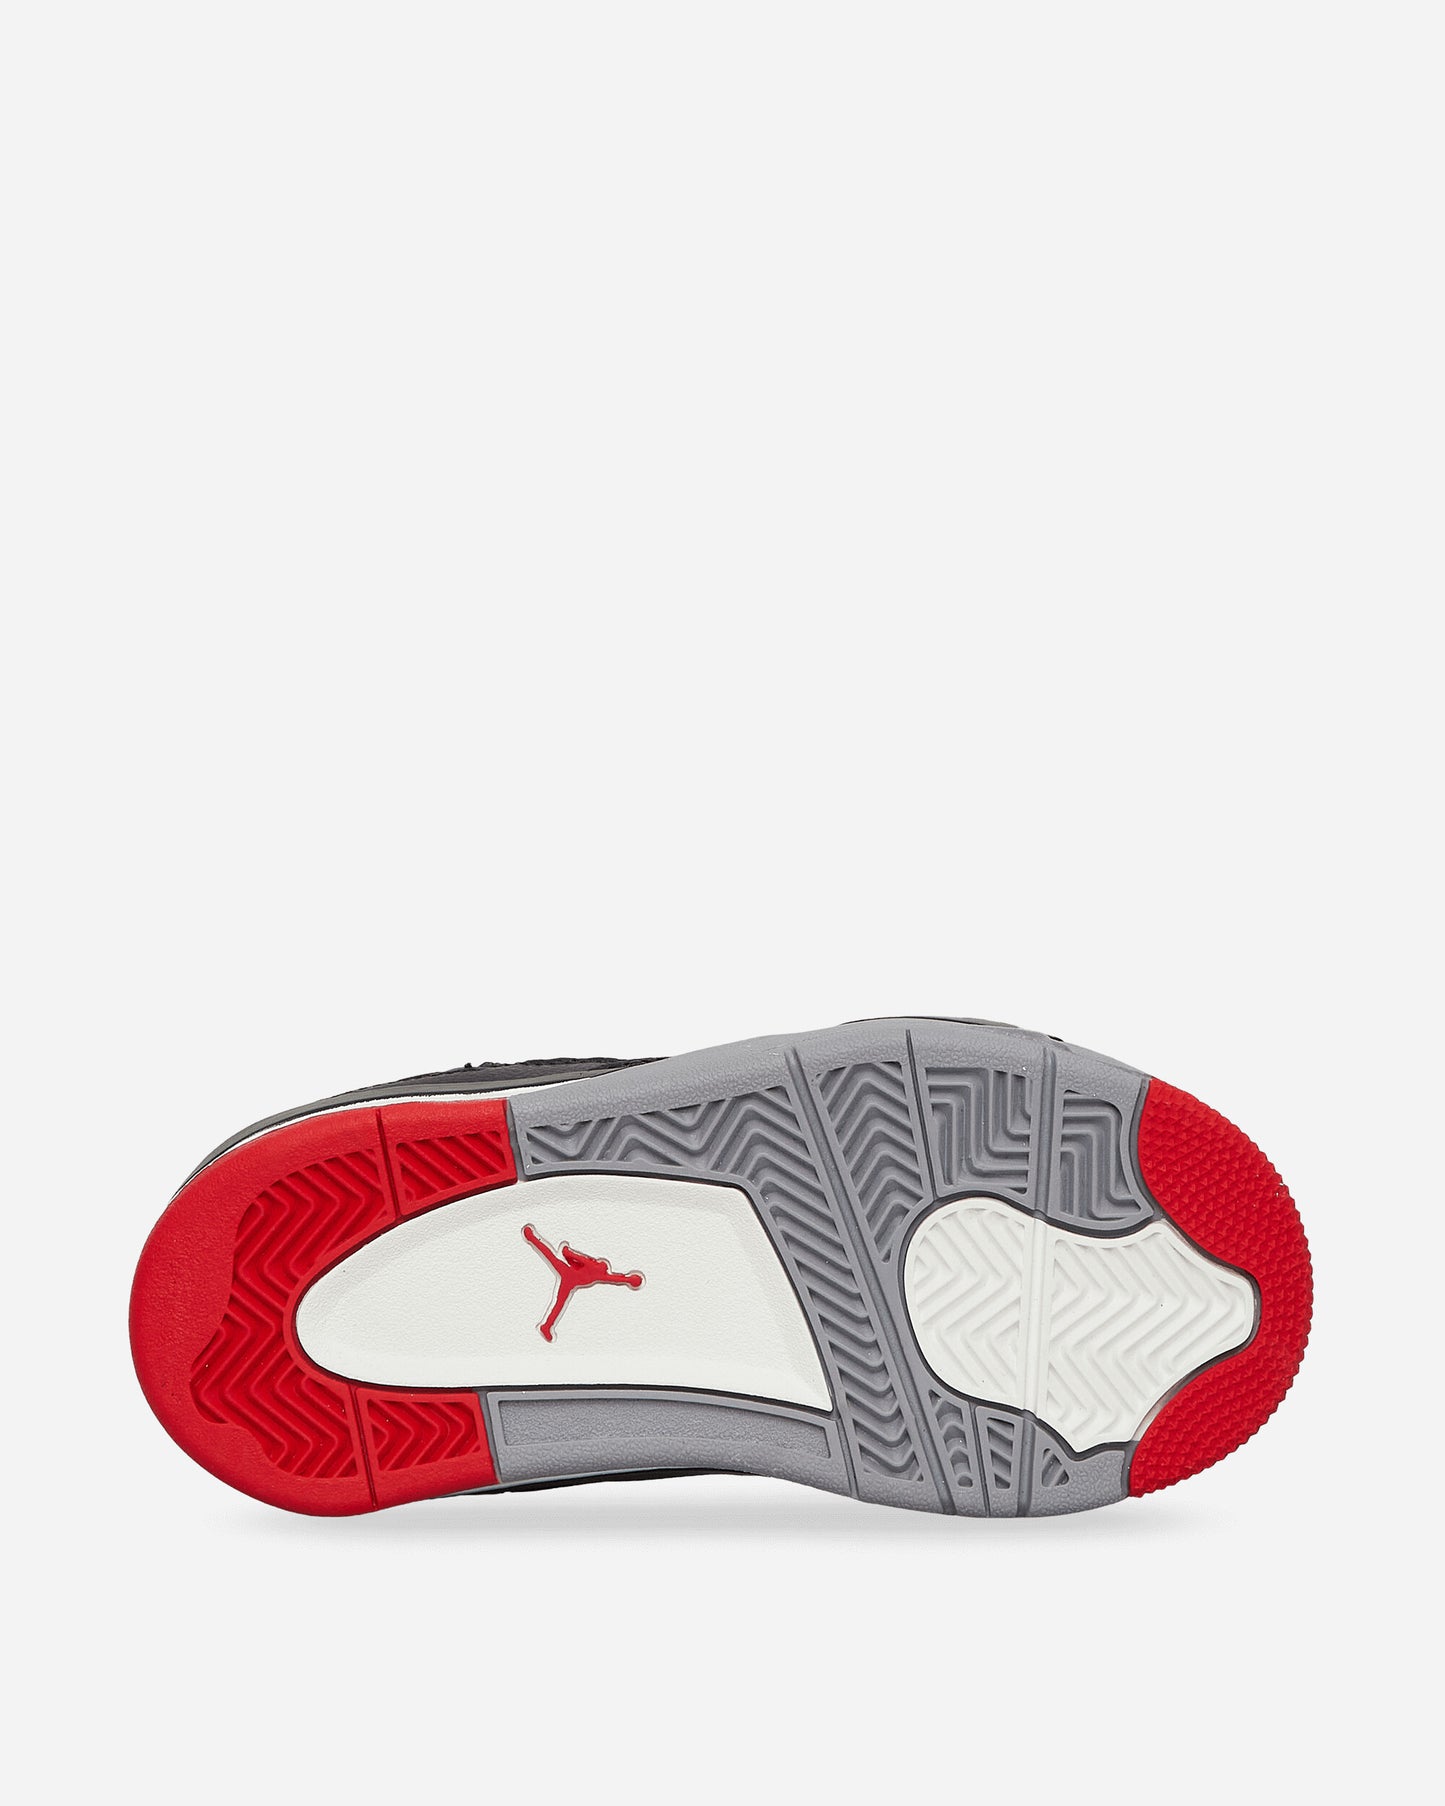 Nike Jordan Jordan 4 Retro (Ps) Black/Fire Red Sneakers High BQ7669-006